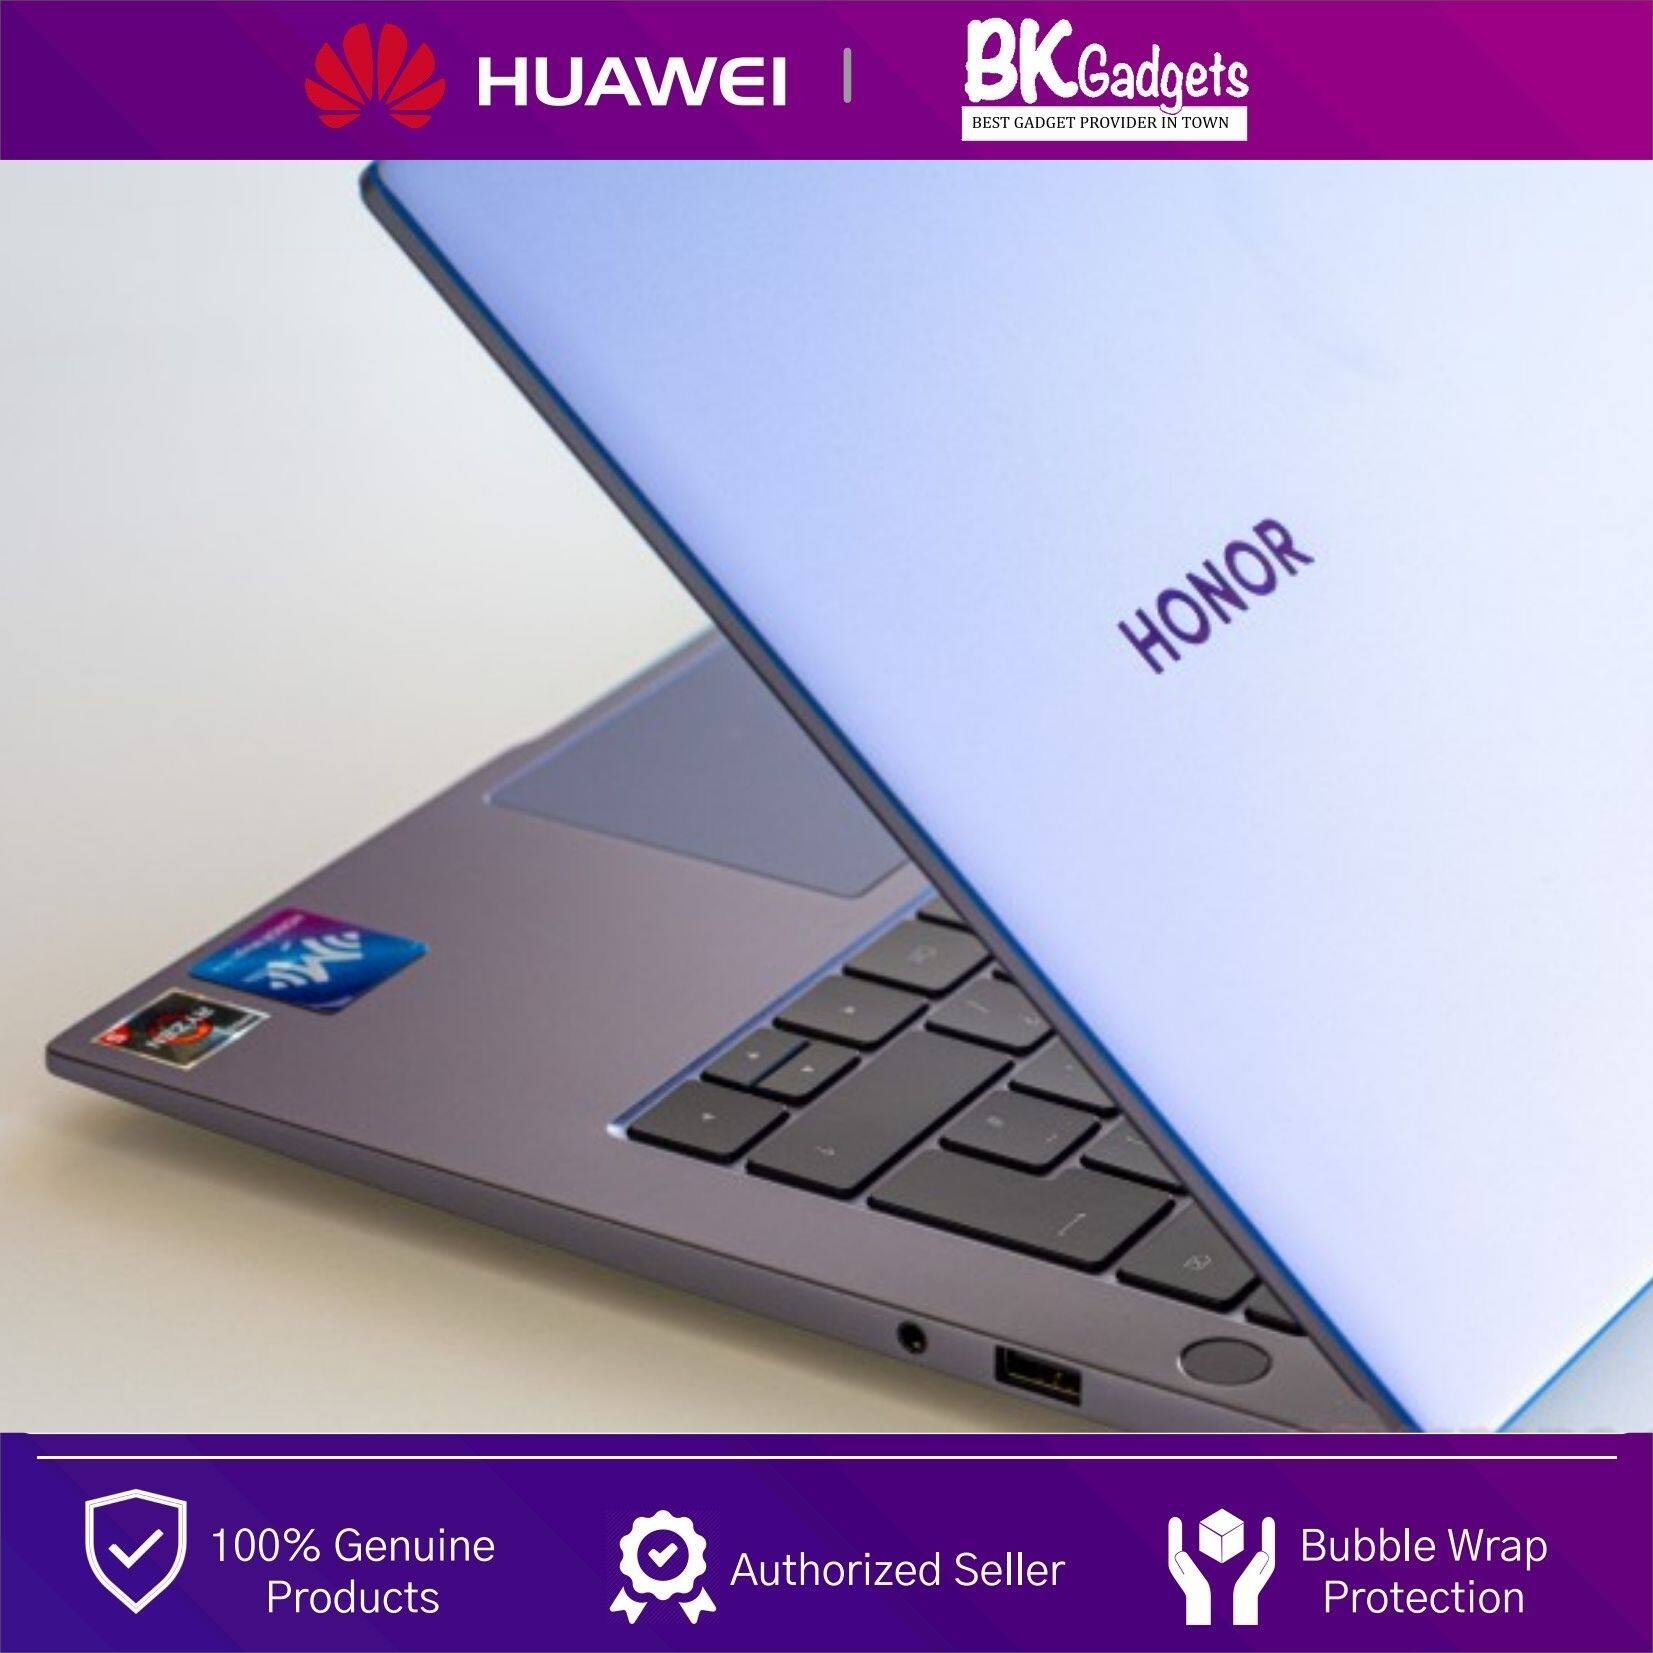 HONOR MagicBook X15 i5 2021 [ 8GB + 512GB + Intel UHD ] Space Grey Laptop | FullView Display | Fingerprint Power Button | 65W Fast Charging | Aluminum Metal Body